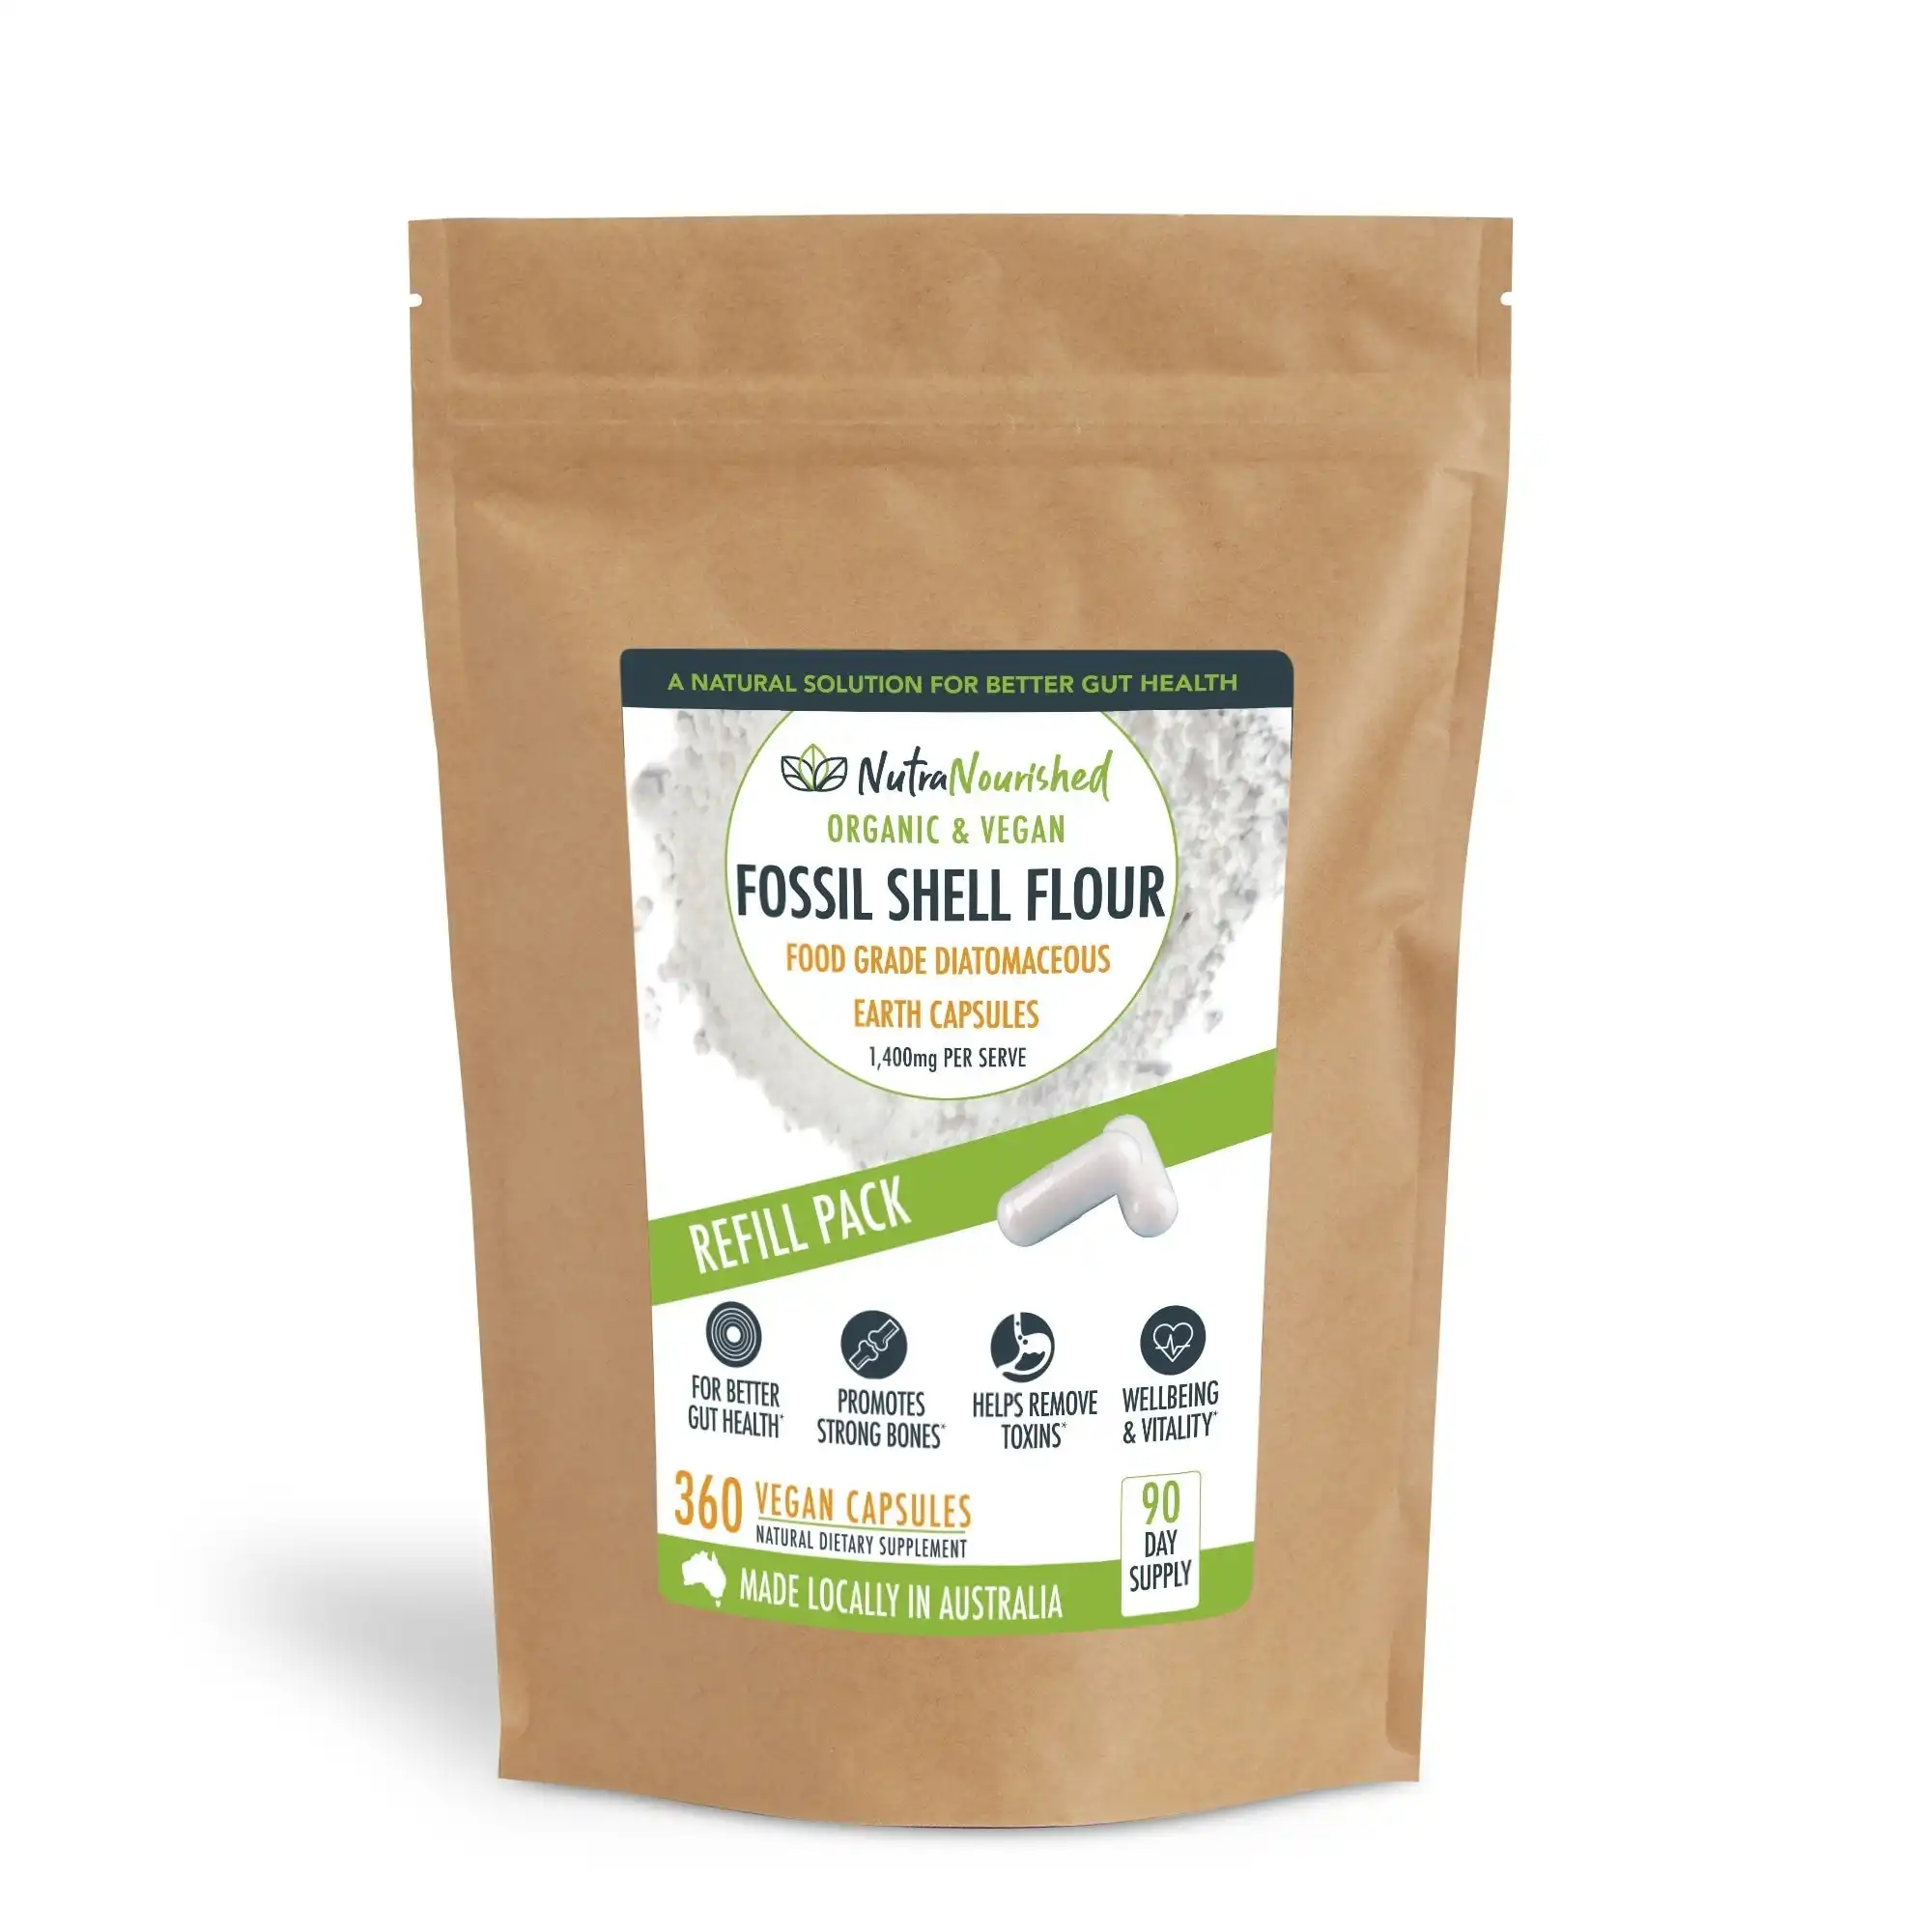 Food Grade Diatomaceous Earth Fossil Shell Flour Capsules Refill Bag 360 Vegan Capsules